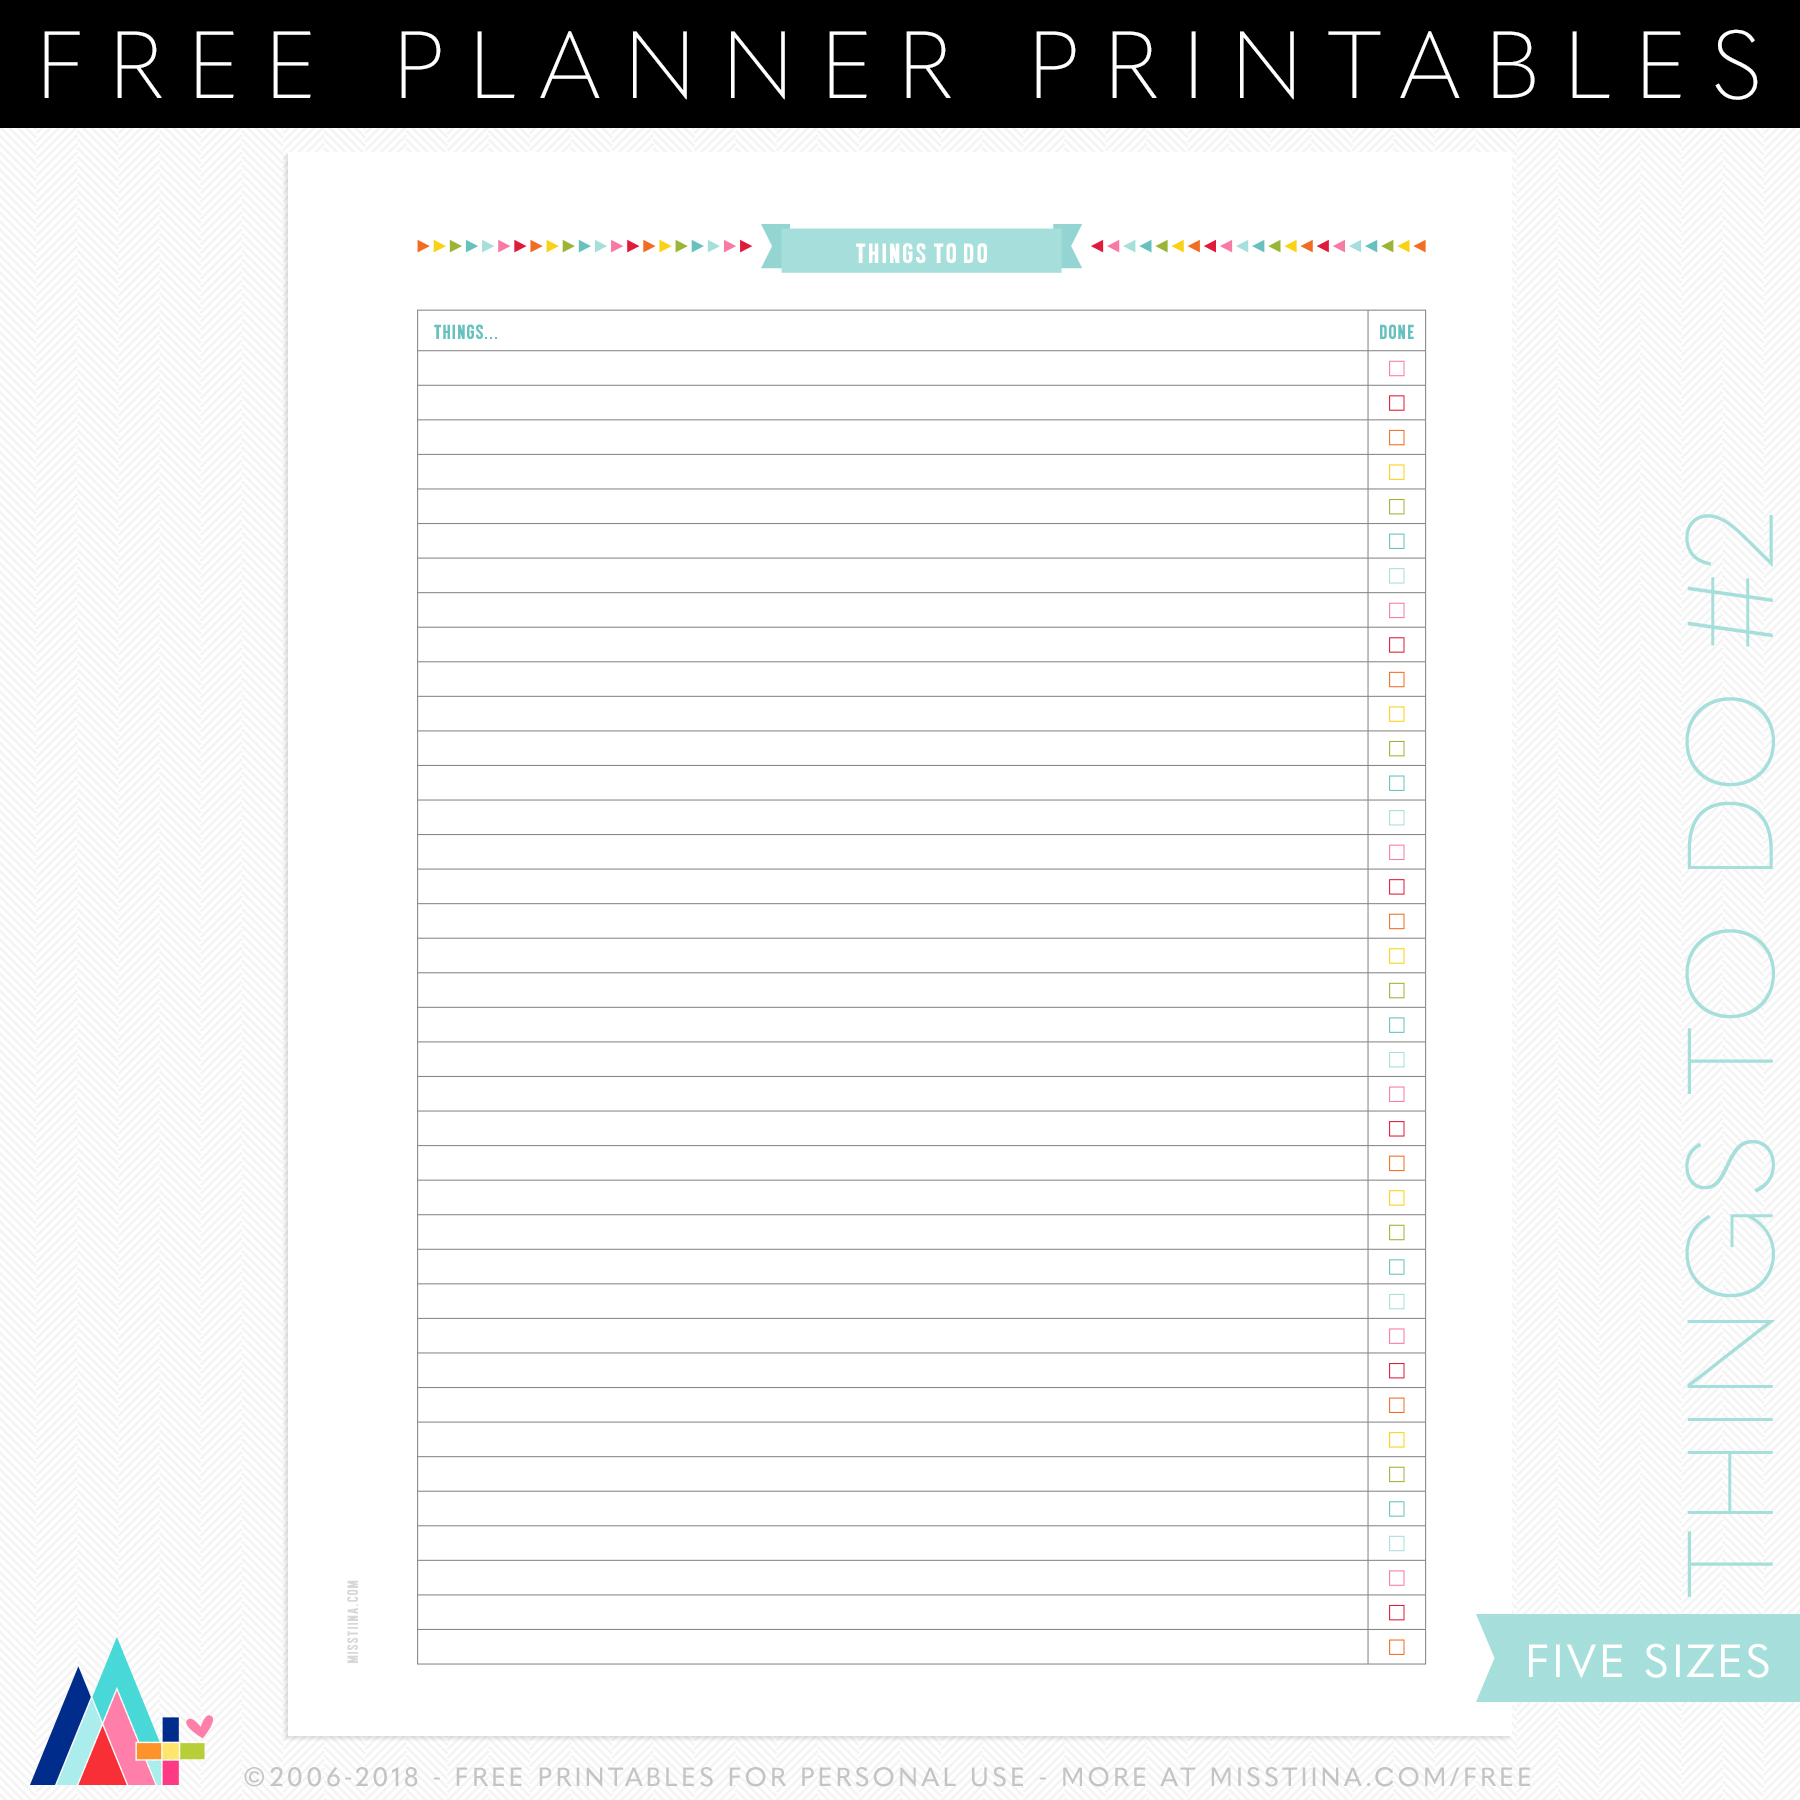 Planner Printables | Misstiina - Free Printable Planners And Organizers